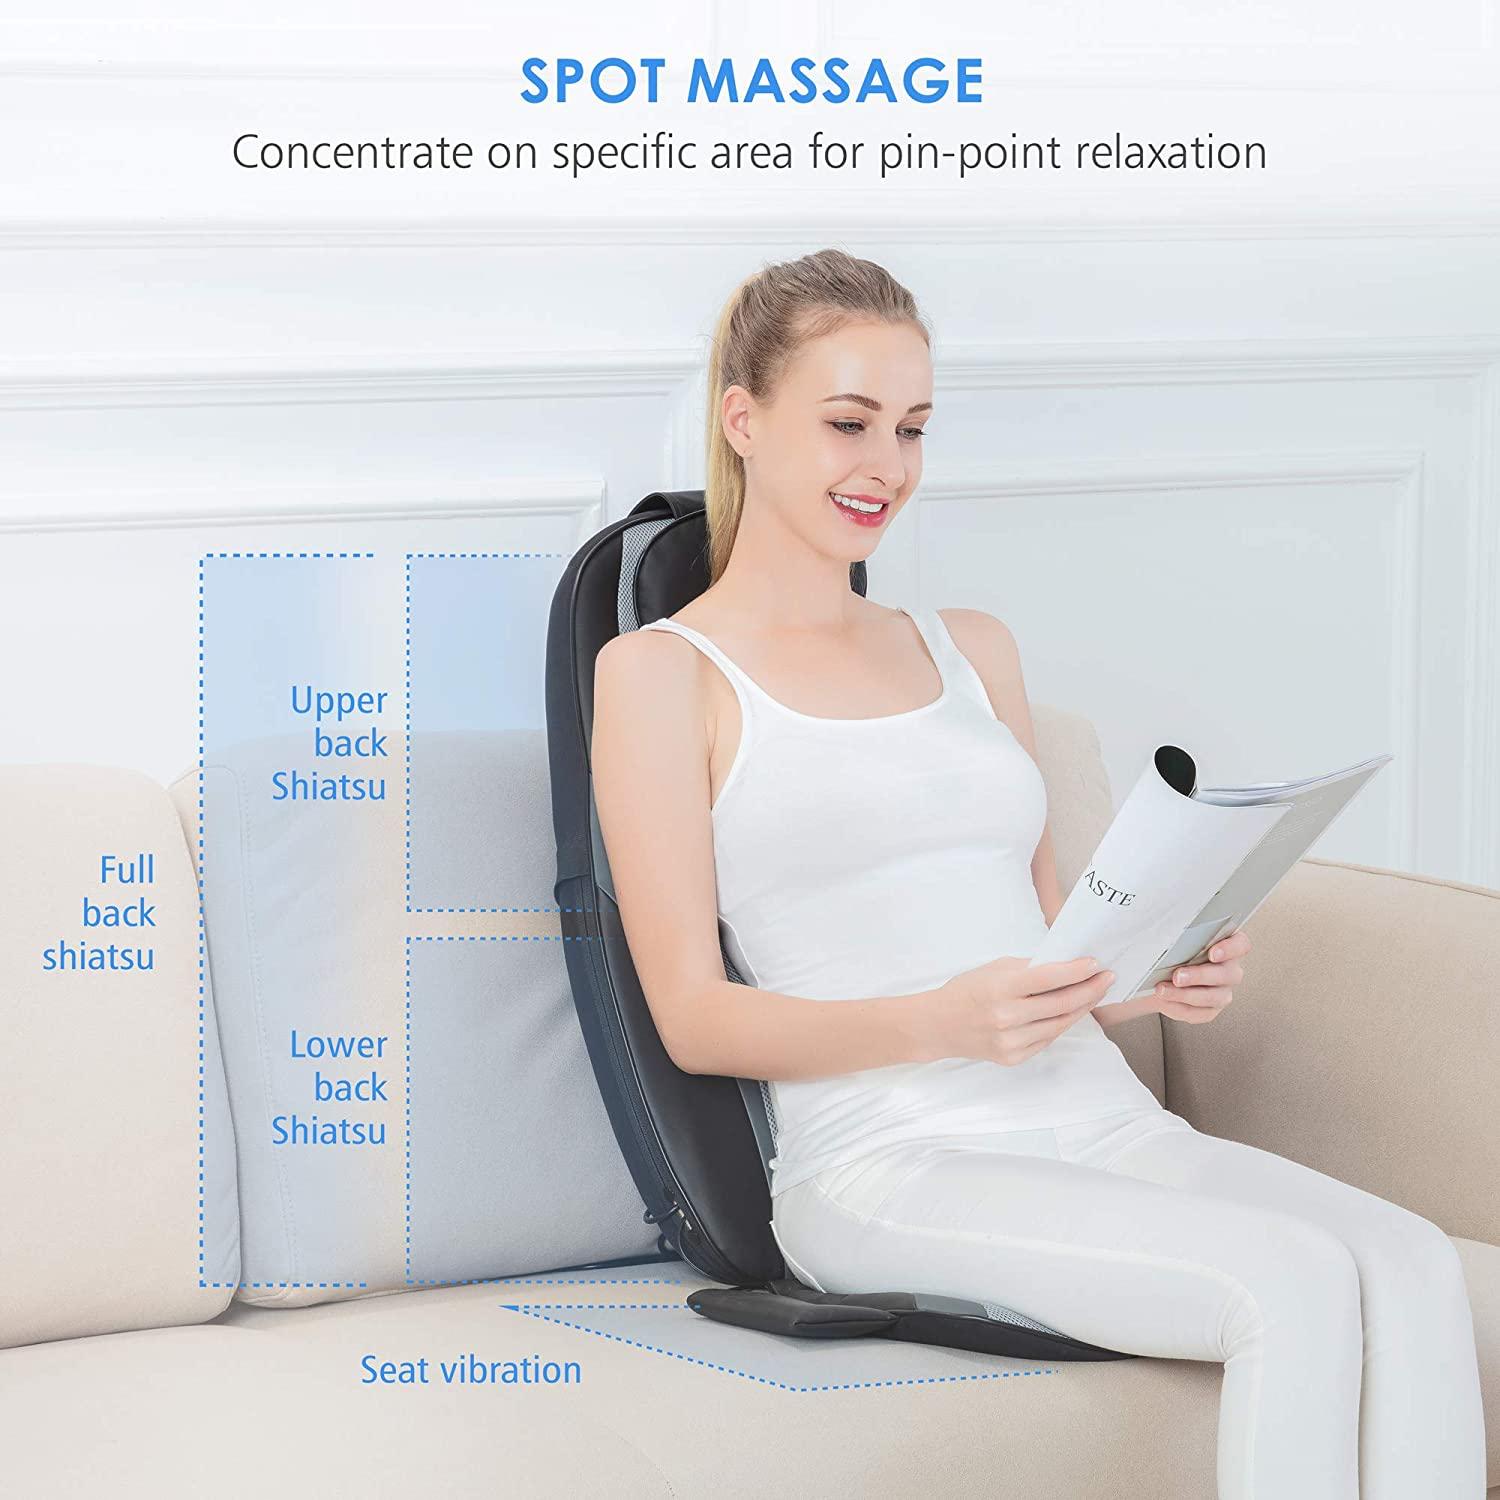 Comfier Shiatsu Back Massager with Heat,Deep Tissue Kneading Massage S